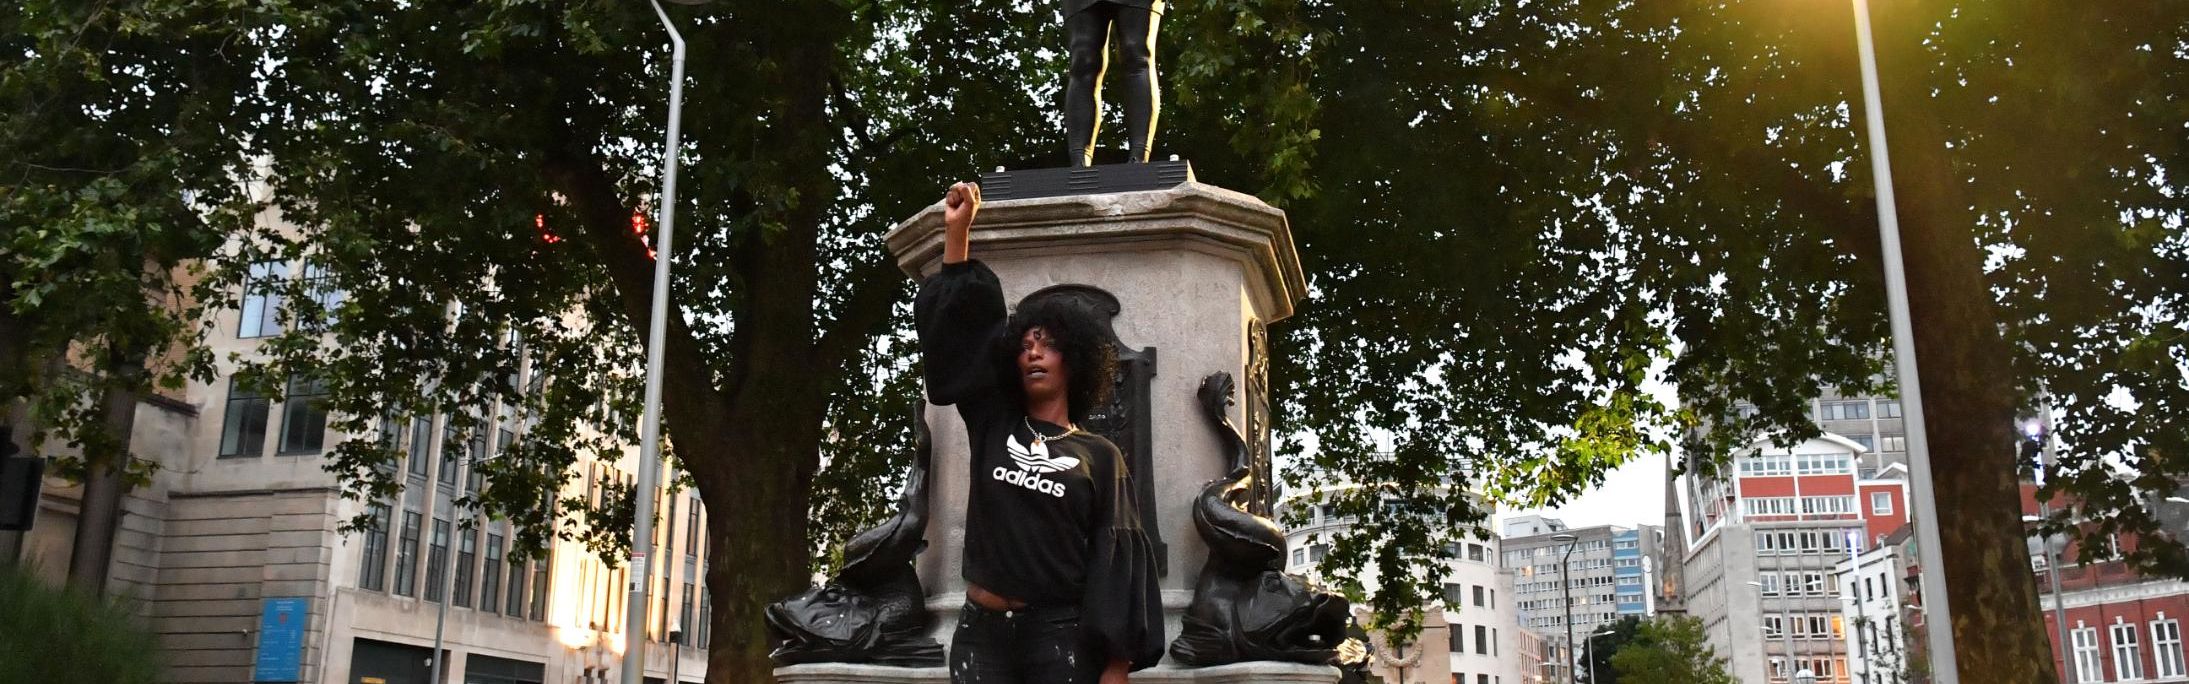 Marc Quinn's Black Lives Matter statue taken down in Bristol | CNN